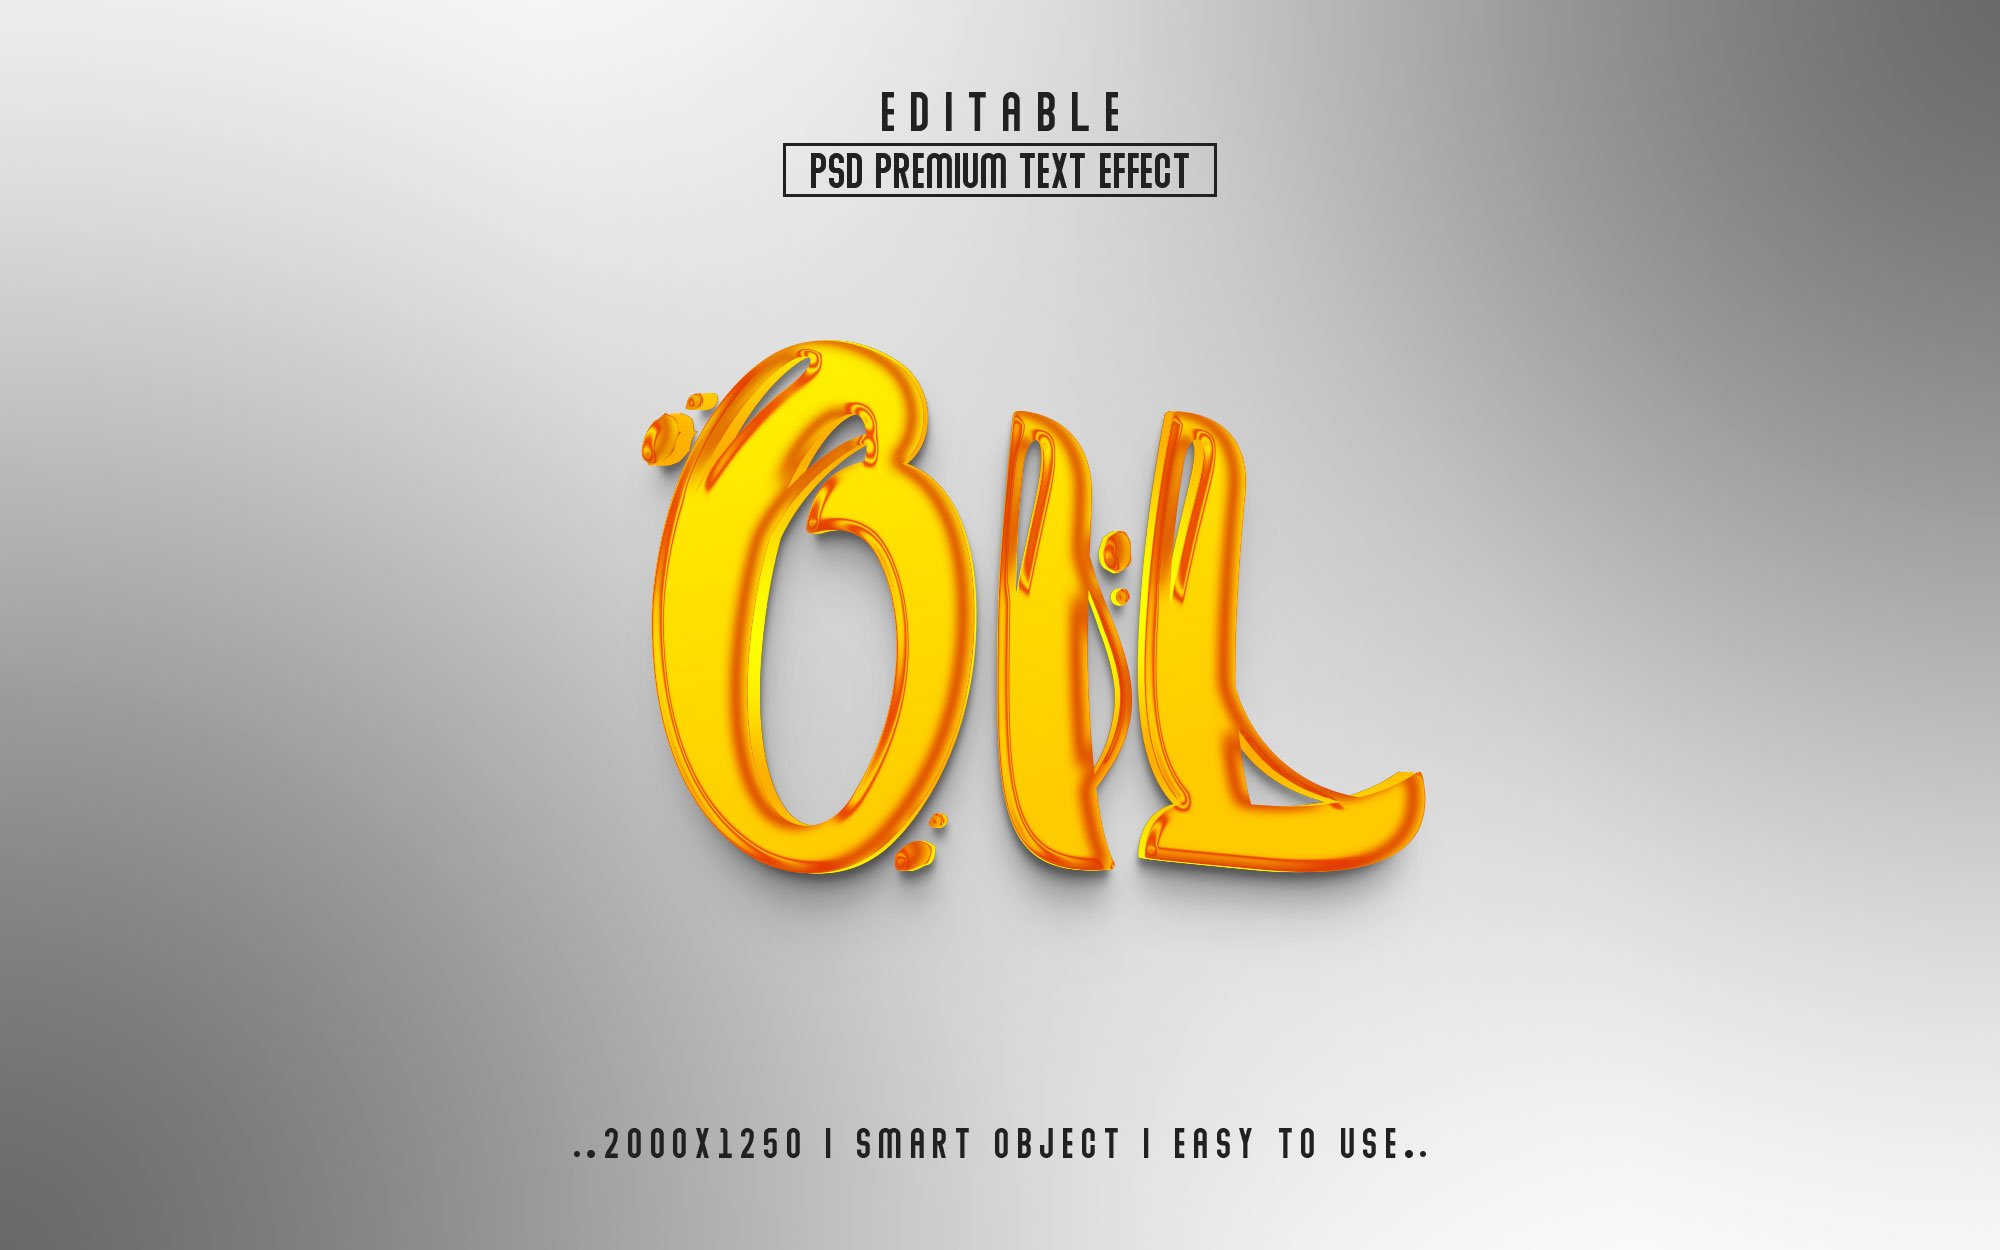 Oil 3D Editable psd Text Effectcover image.